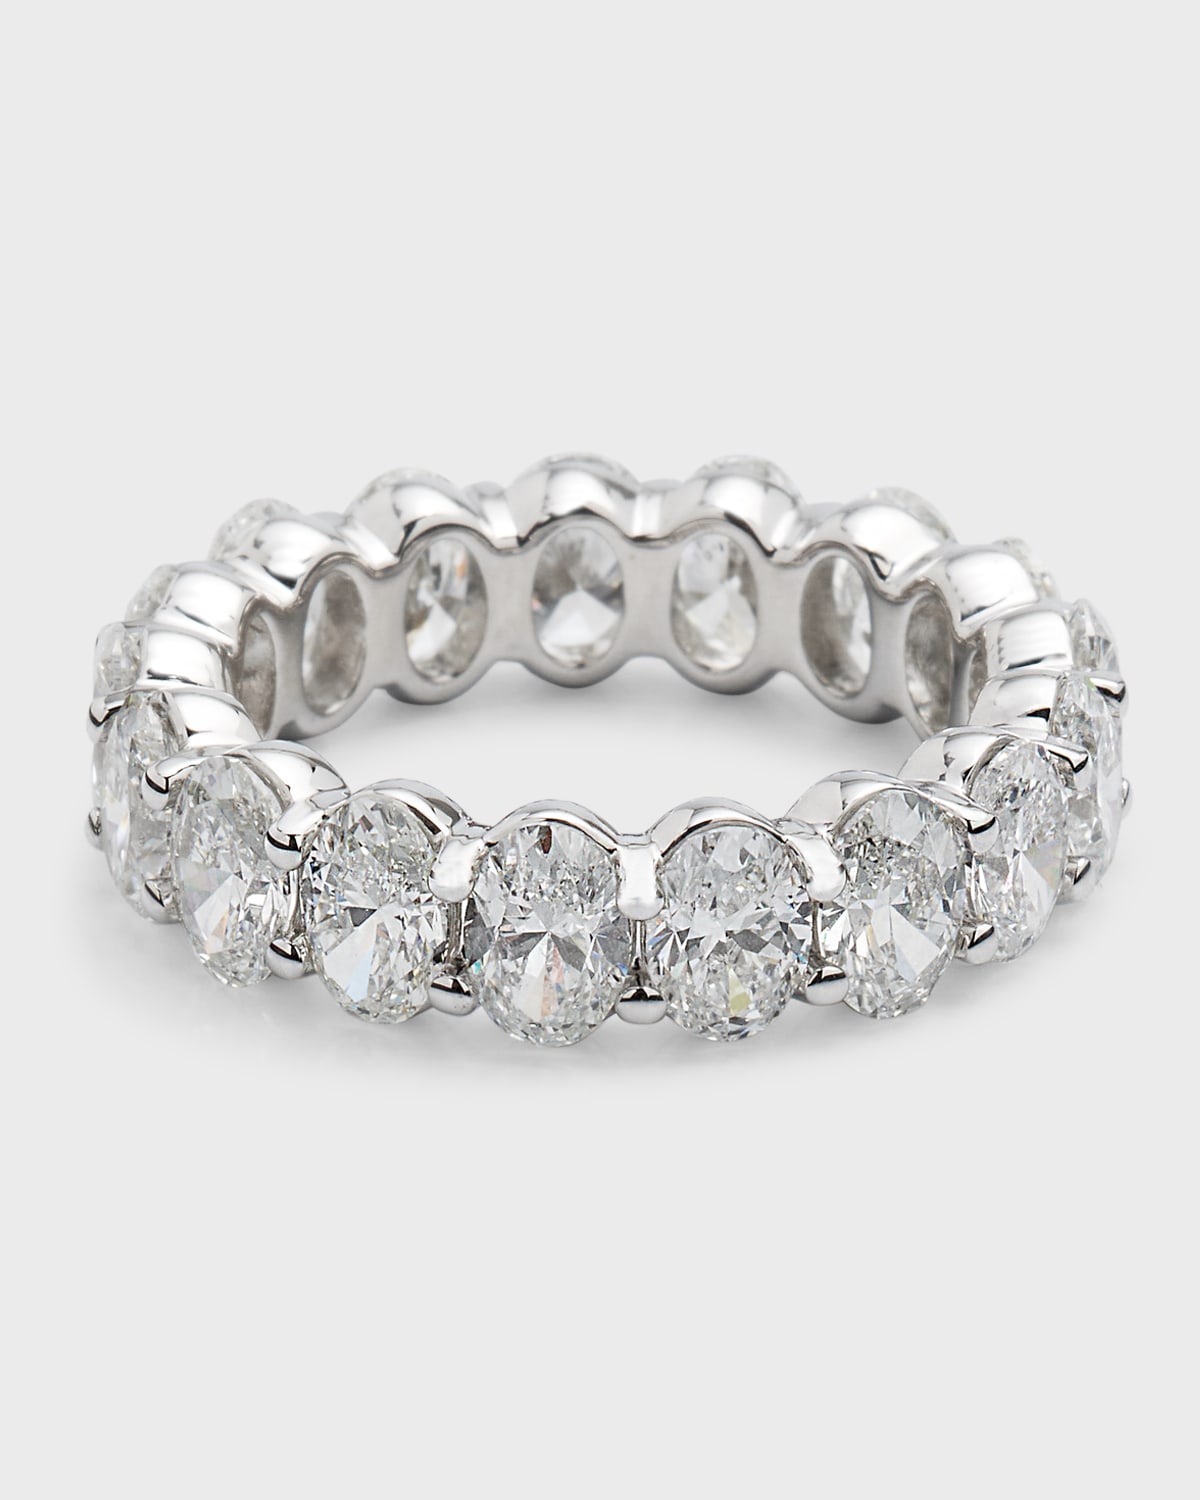 Oval-Cut Diamond 18K White Gold Eternity Band Ring, Size 6